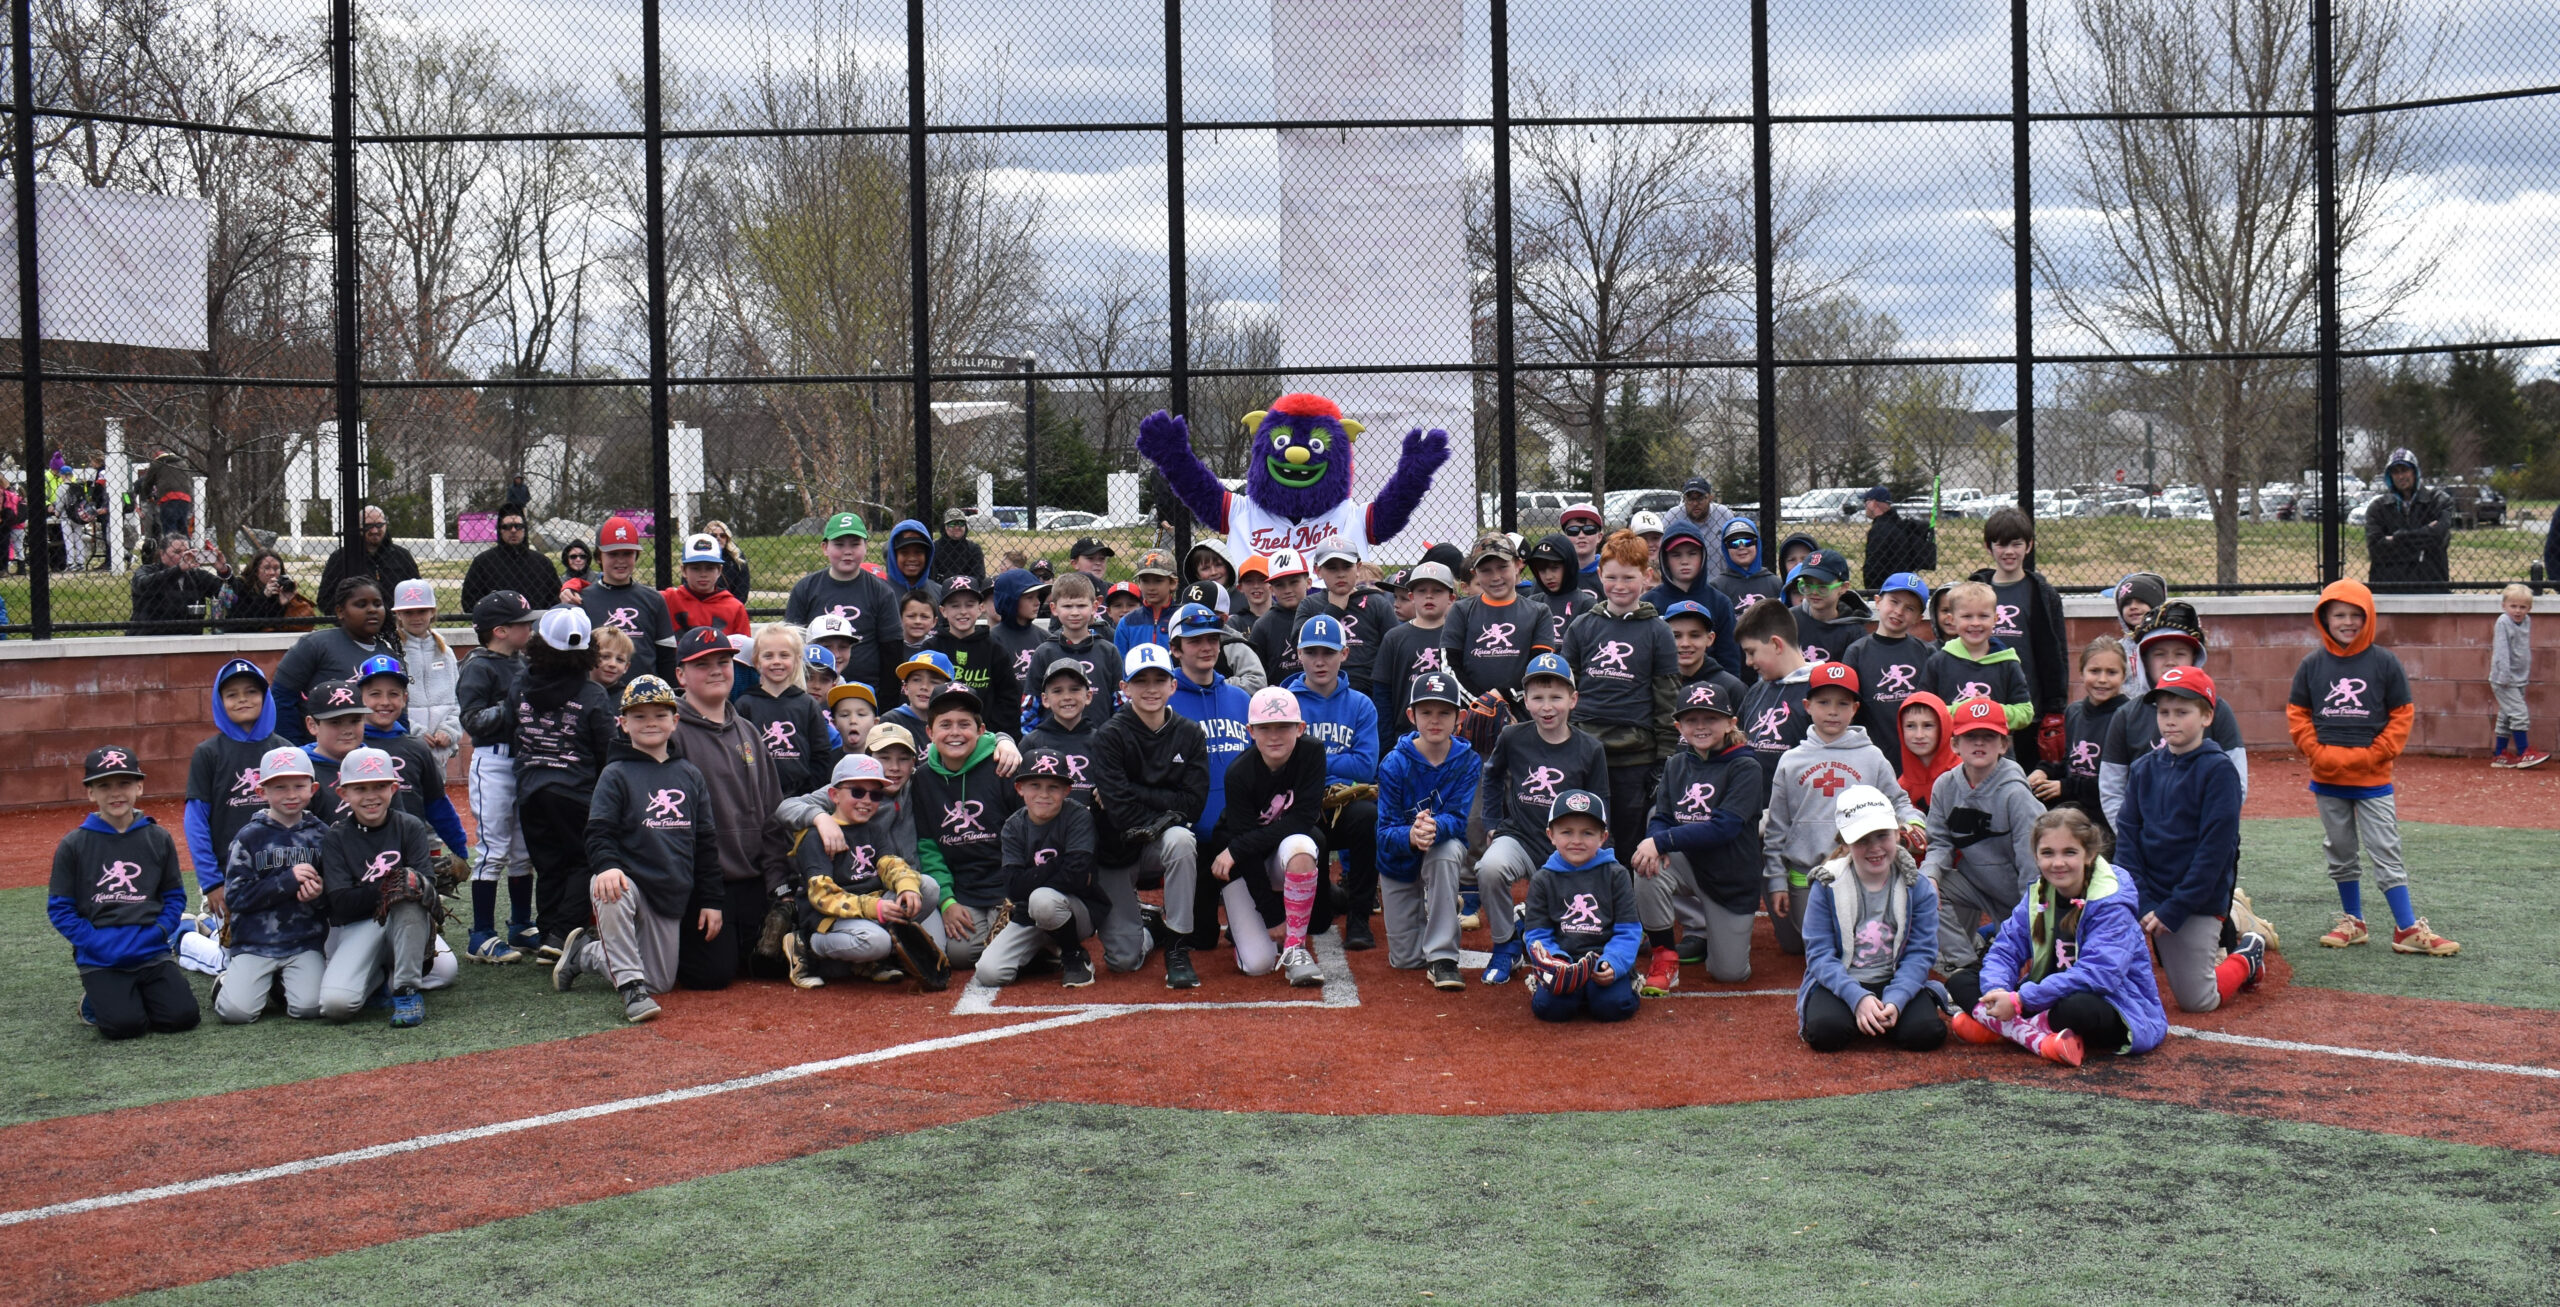 <h1 class="tribe-events-single-event-title">Karen Friedman Memorial Baseball Camp for a Cure</h1>